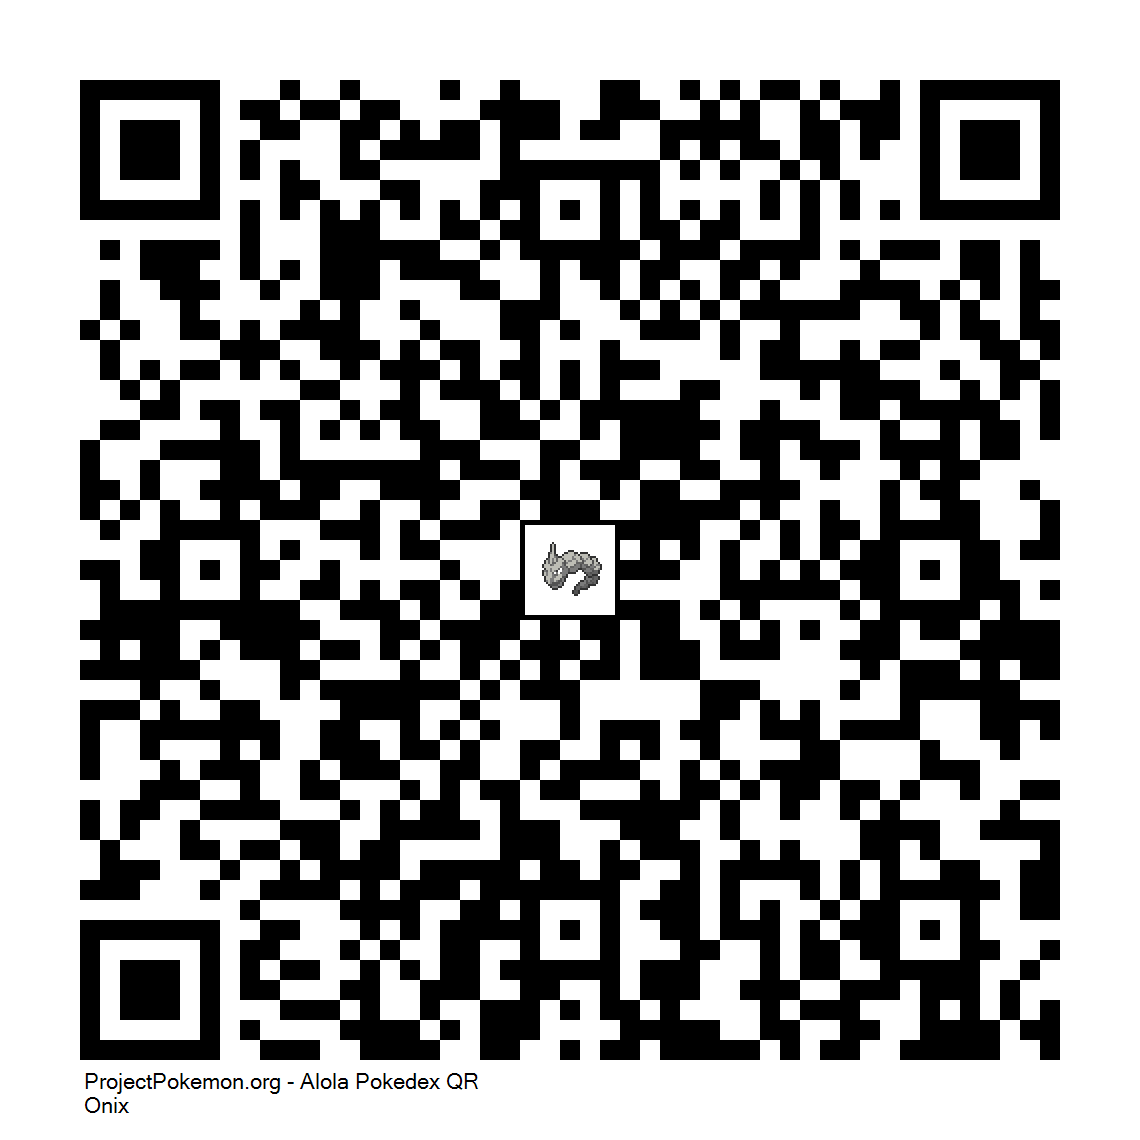 095 - Onix.png - Generation 7 - QR Codes - Project Pokemon Forums